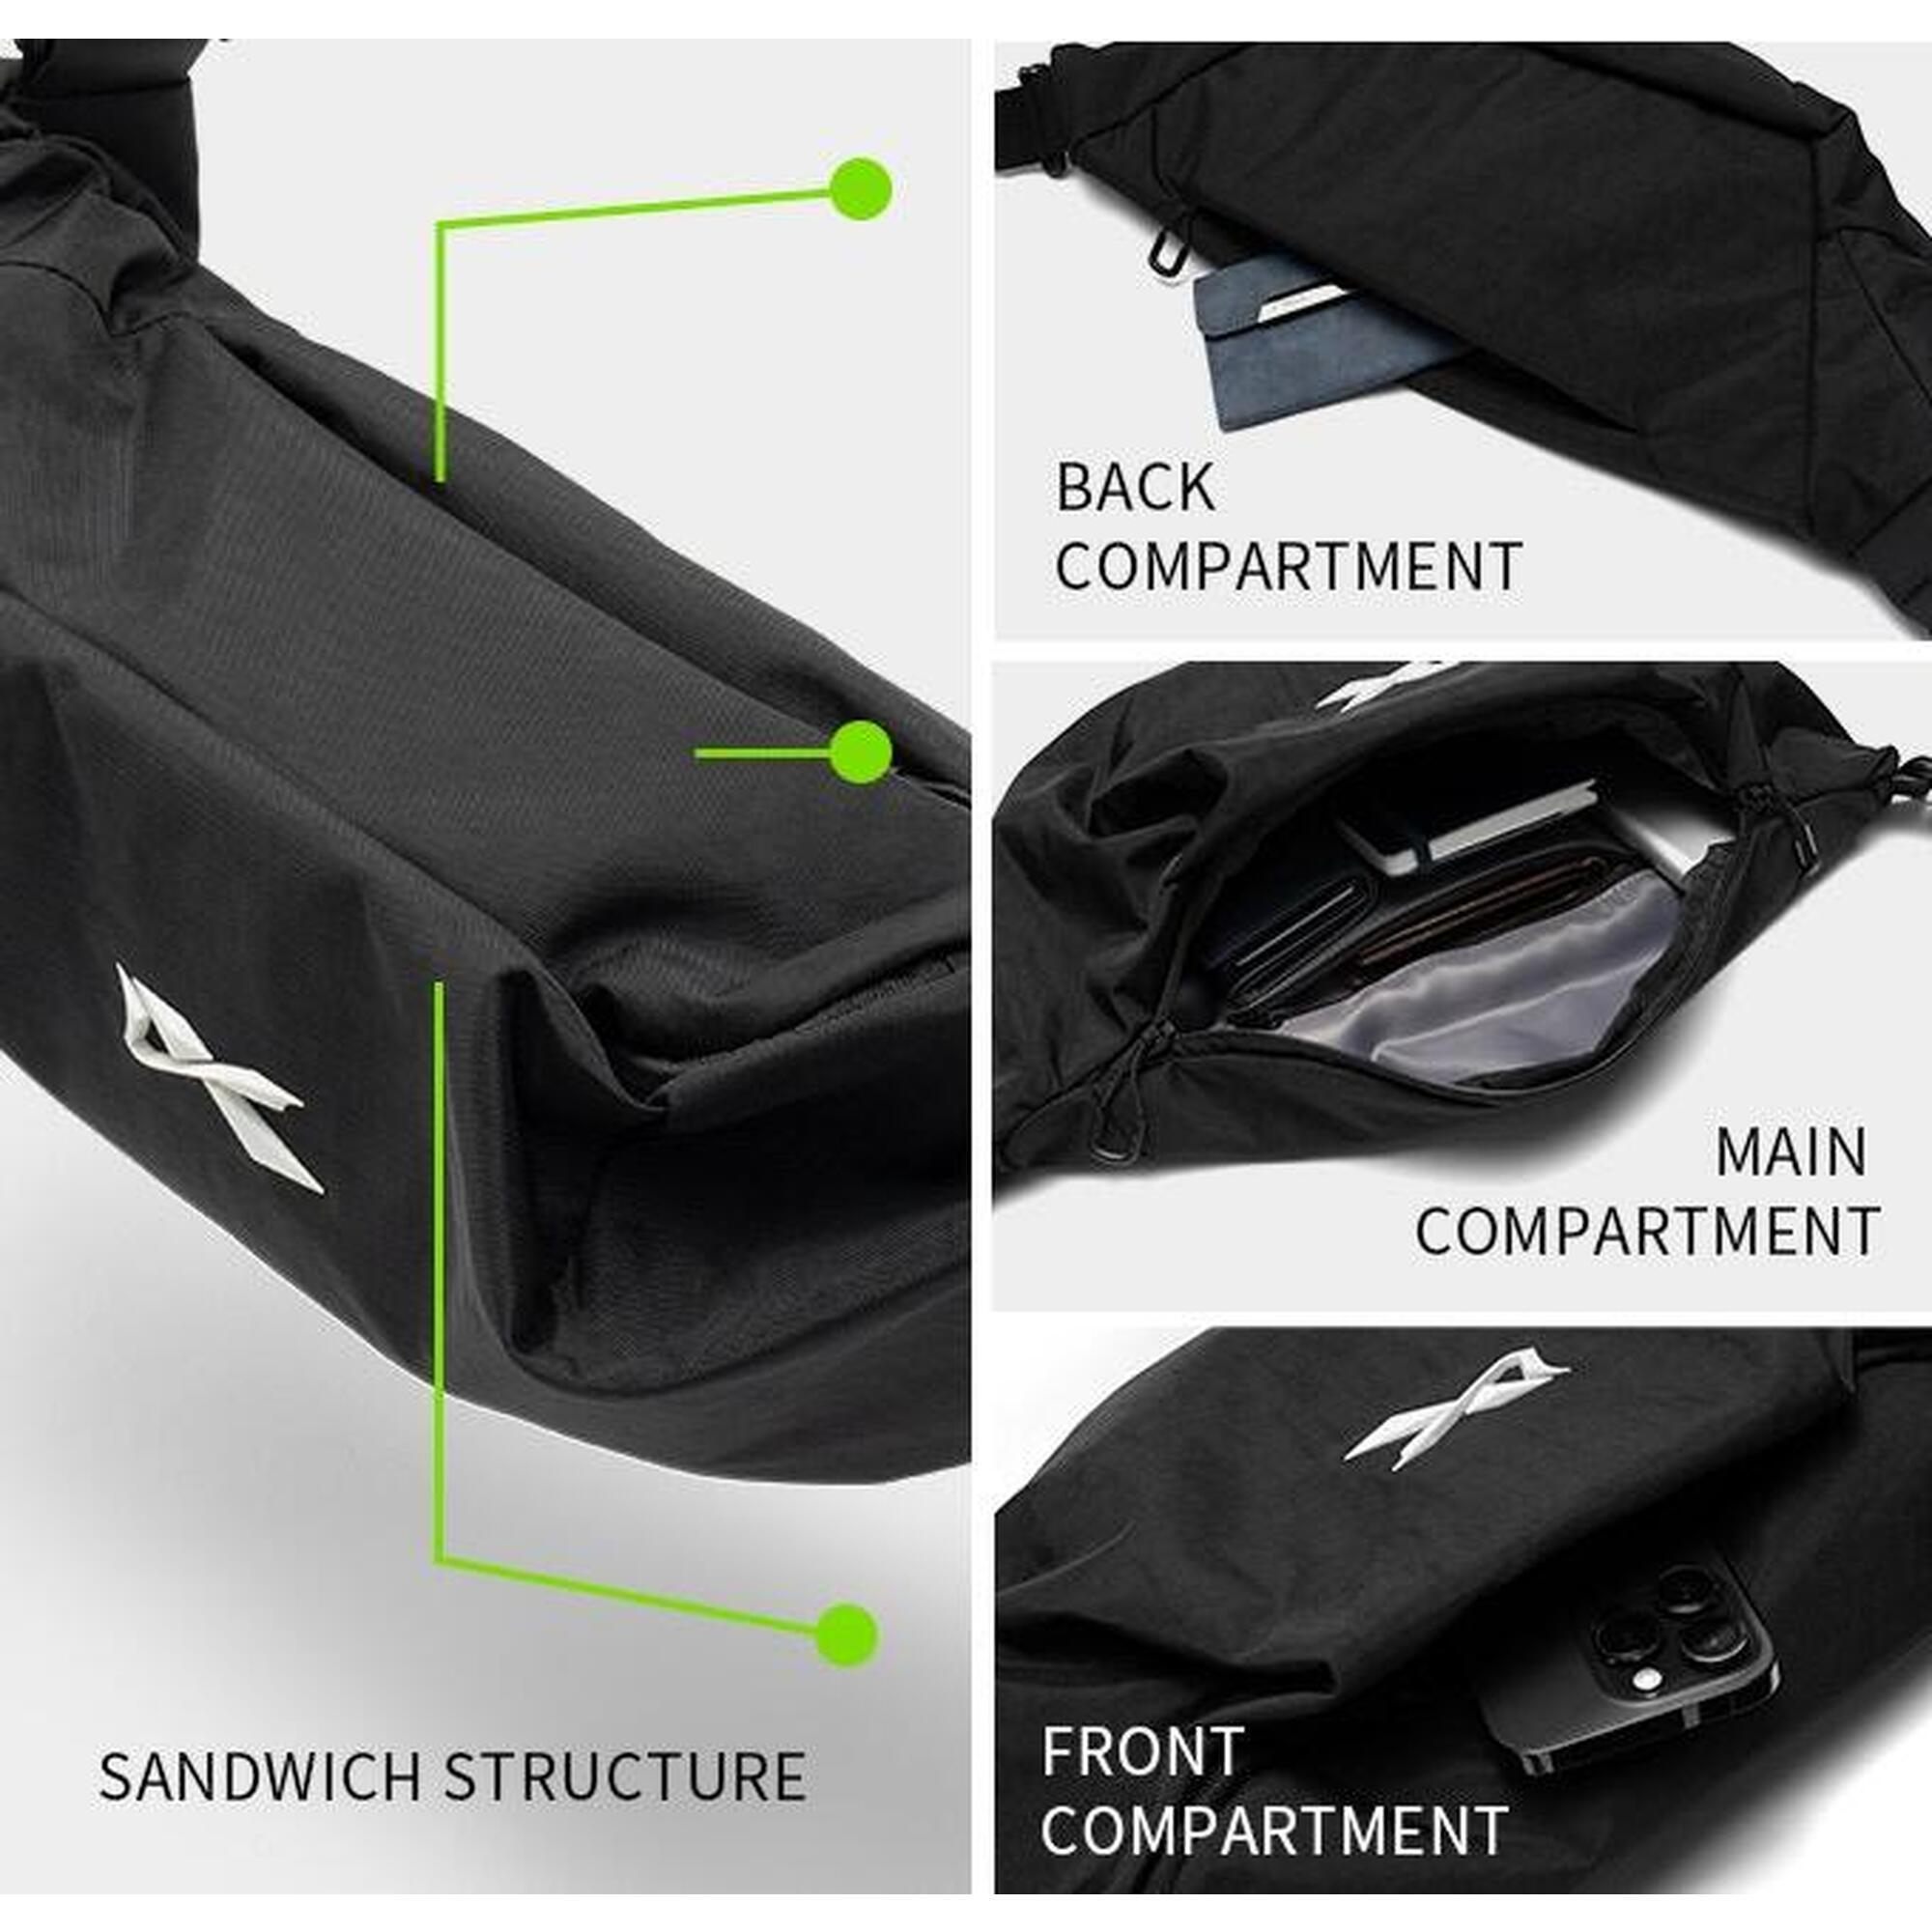 VIA Chest Bag 4L - Black